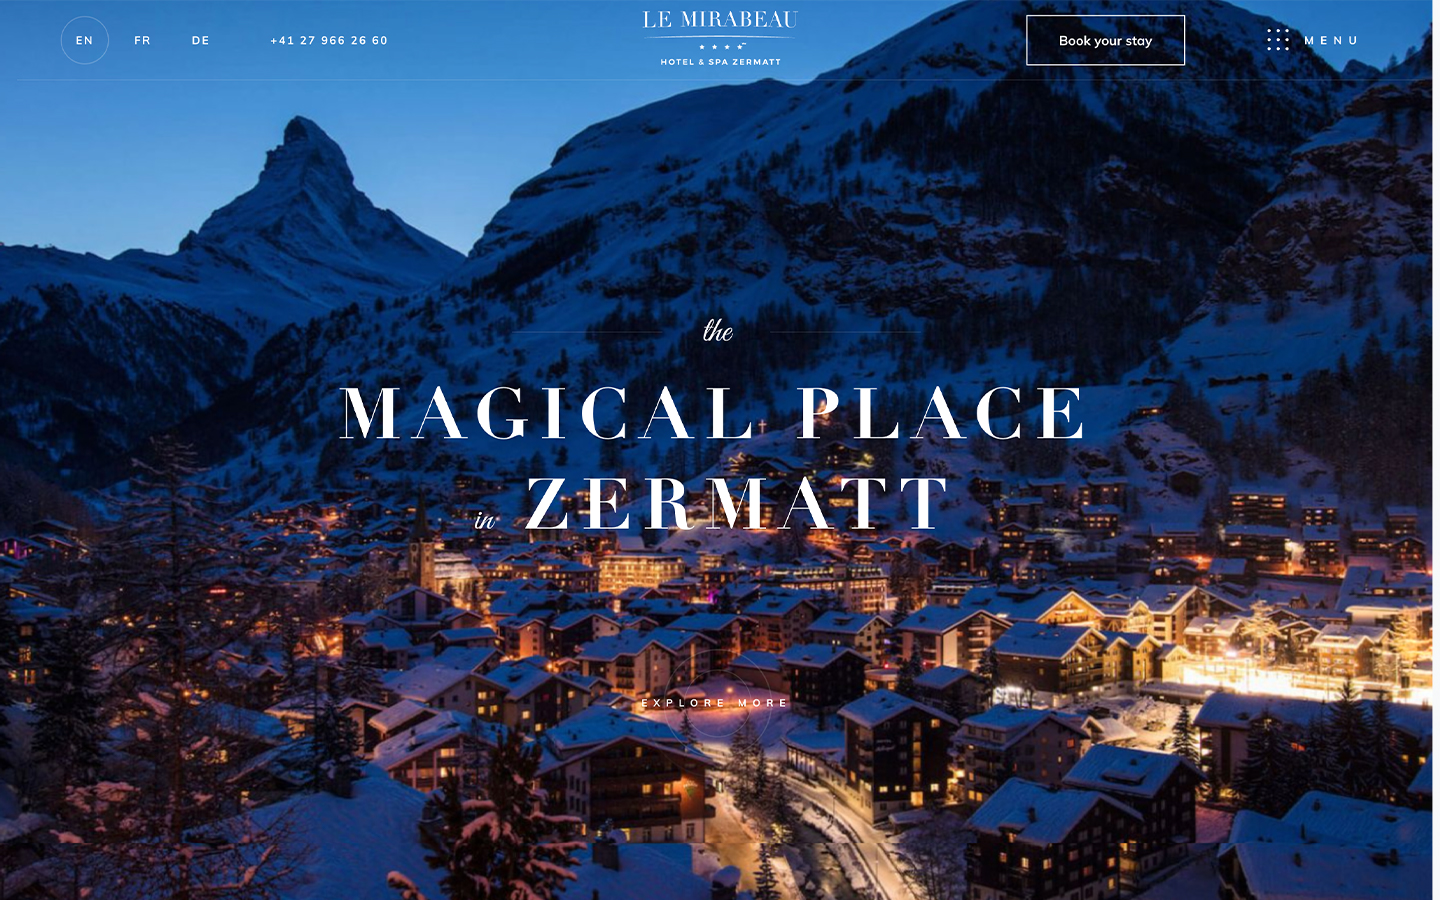 Le Mirabeau Hotel & Spa Zermatt | Magical Place In Zermatt